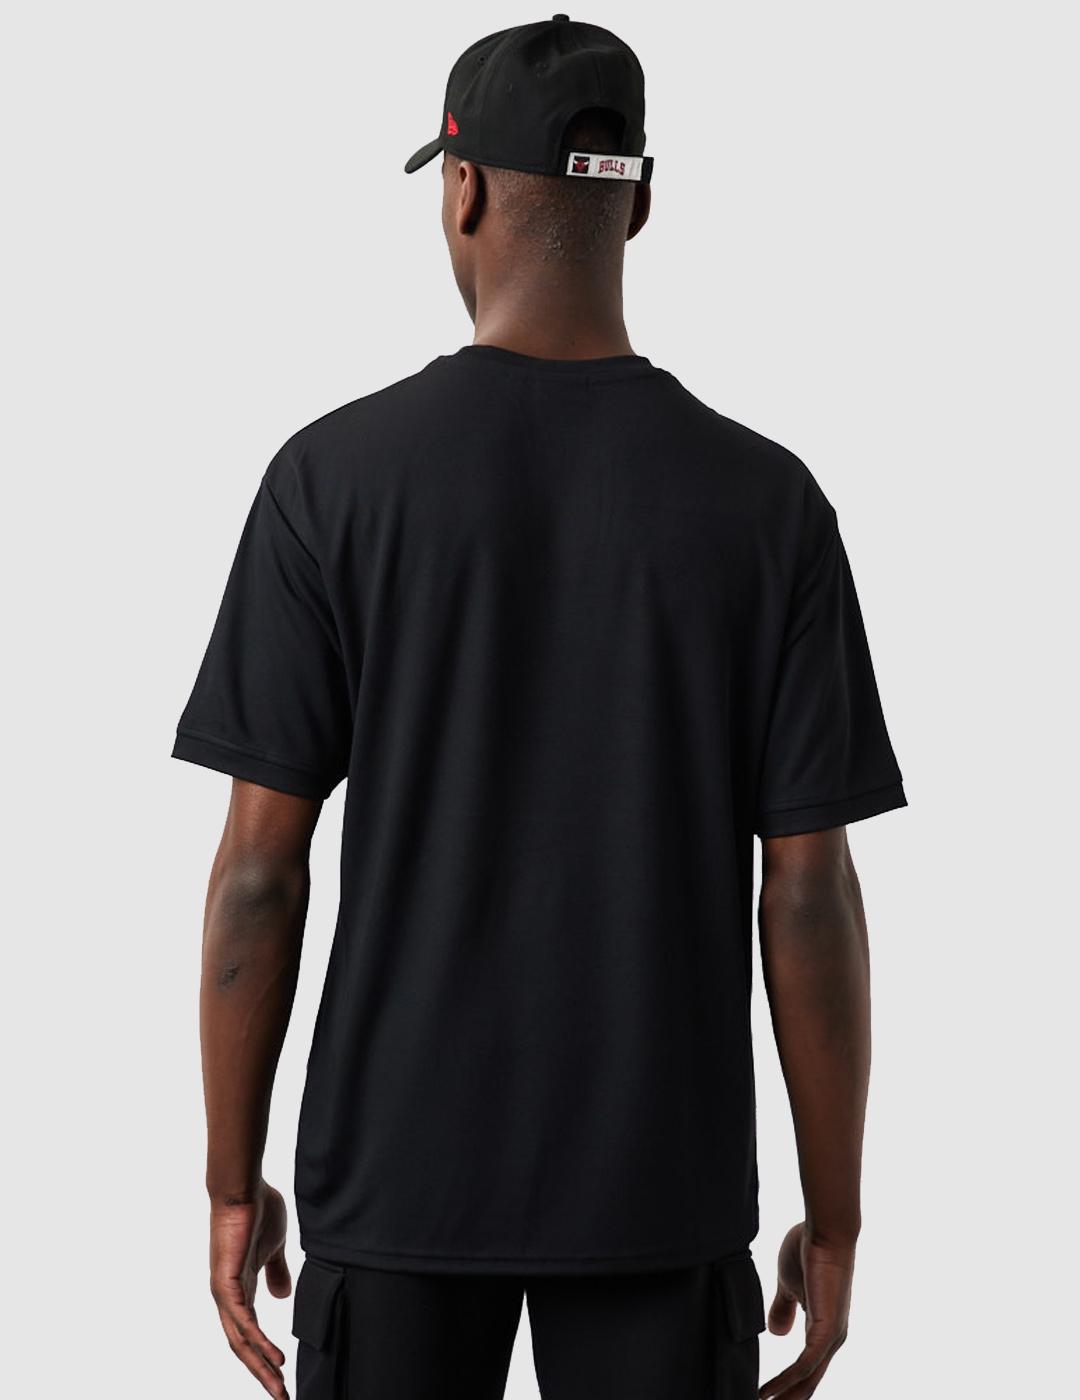 Camiseta NEW ERA SCRIPT MESH BULLS - Black